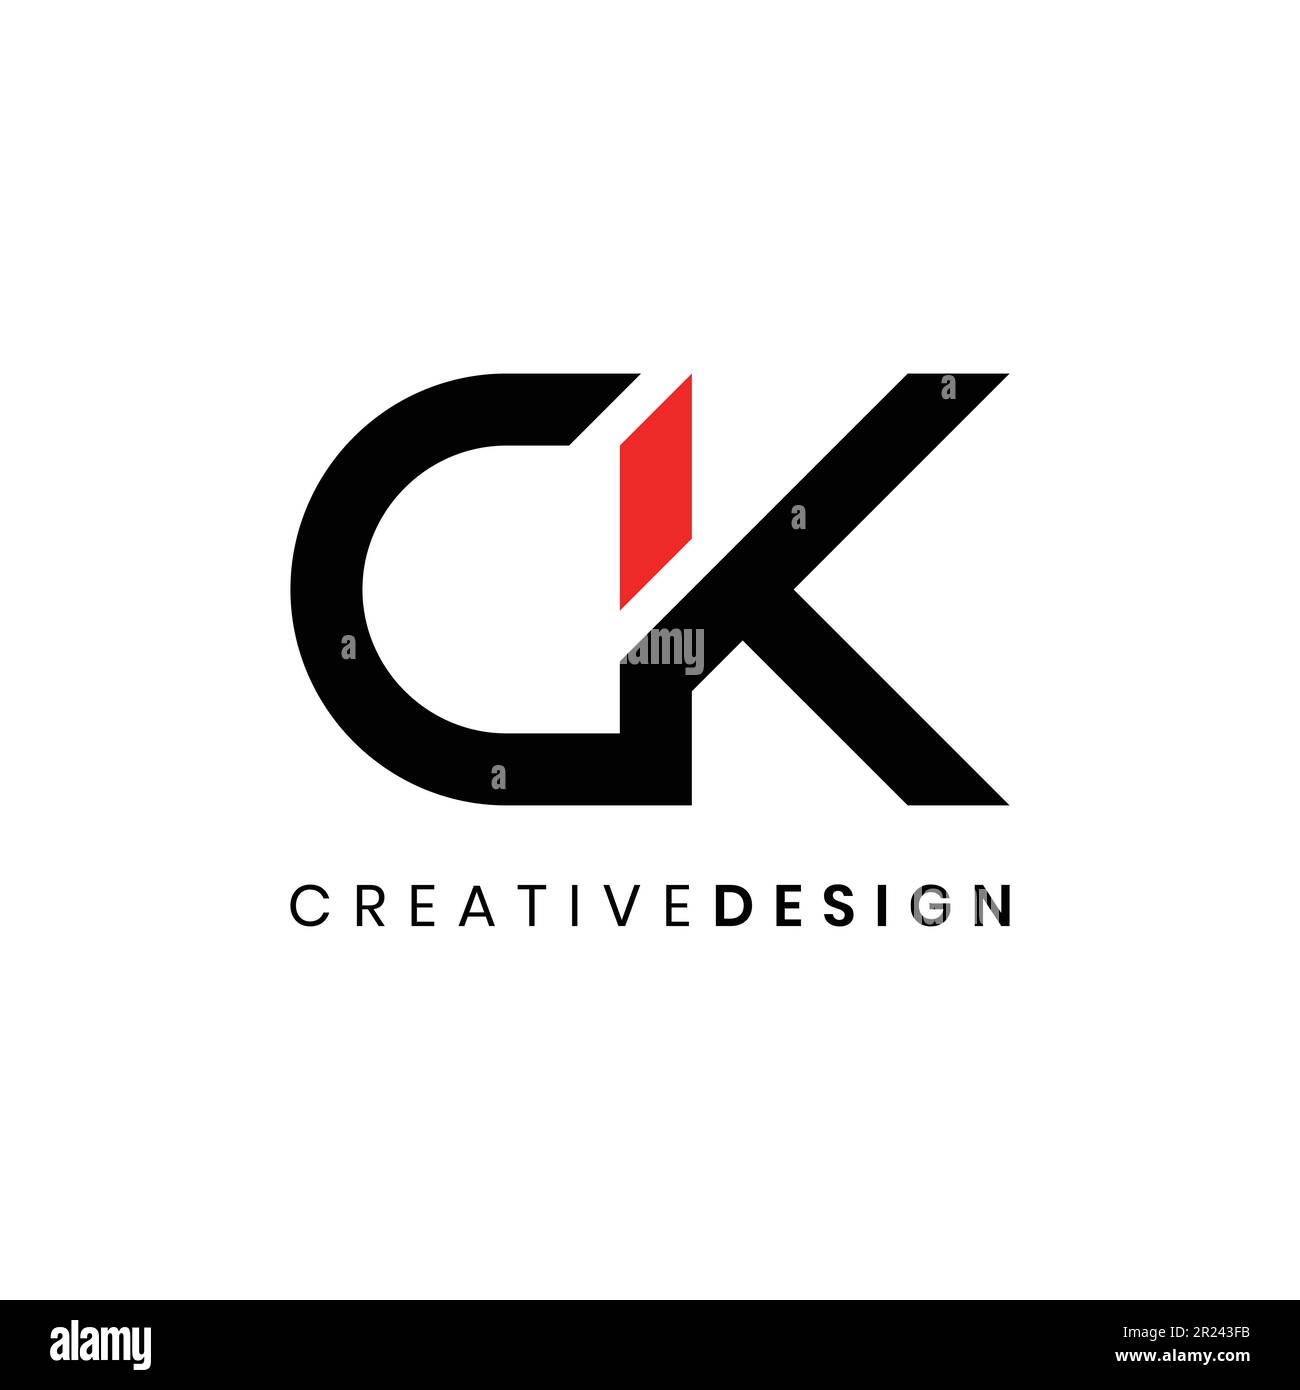 Kreativer, moderner, einfacher Designvektor mit CK-Logo Stock Vektor